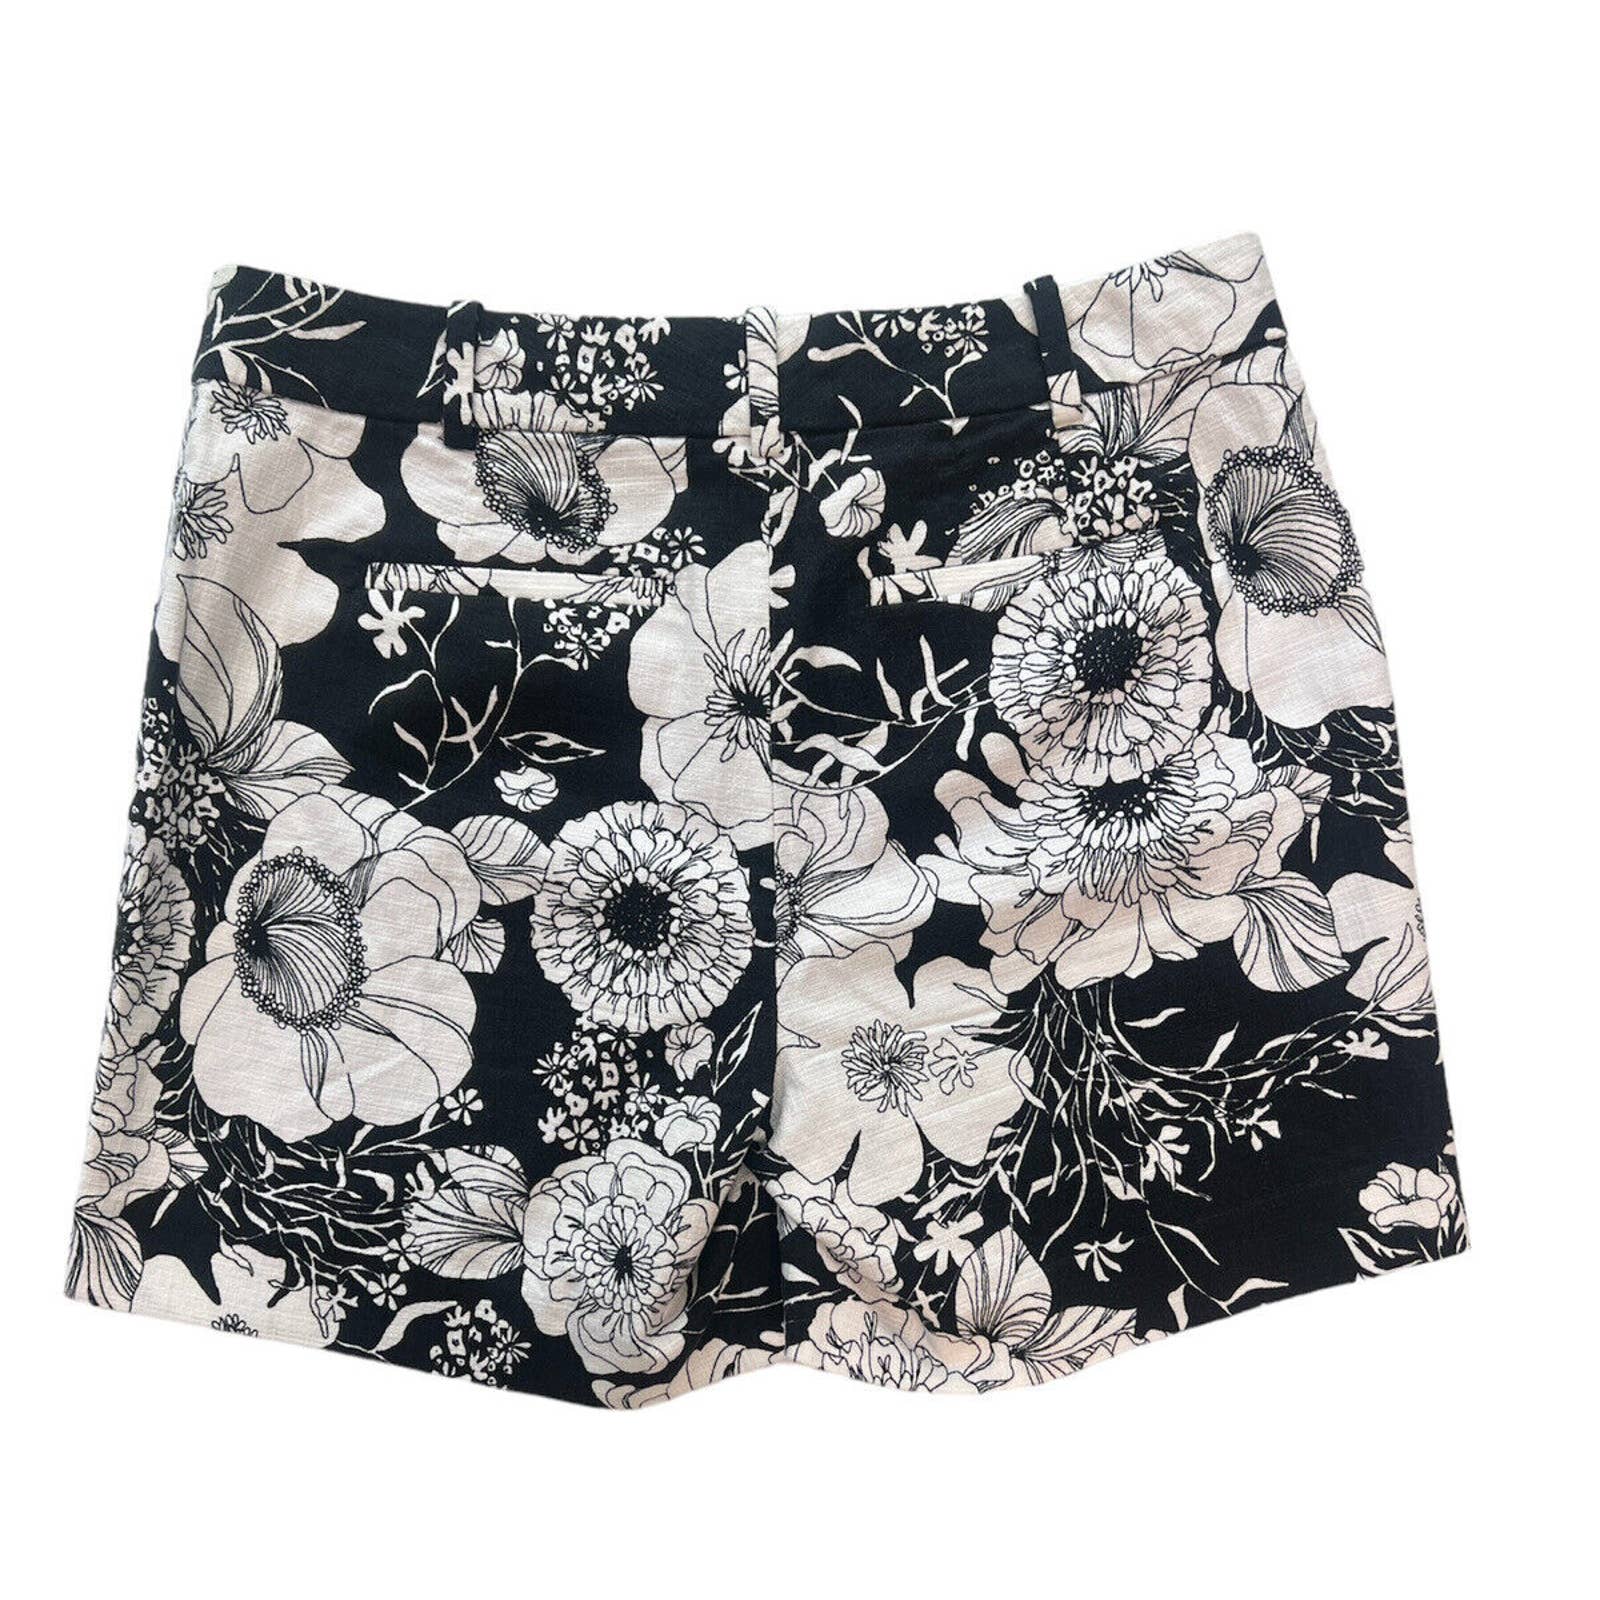 Talbots Cotton Shorts Women’s 2 Black & White Floral 5.5” Inseam Casual